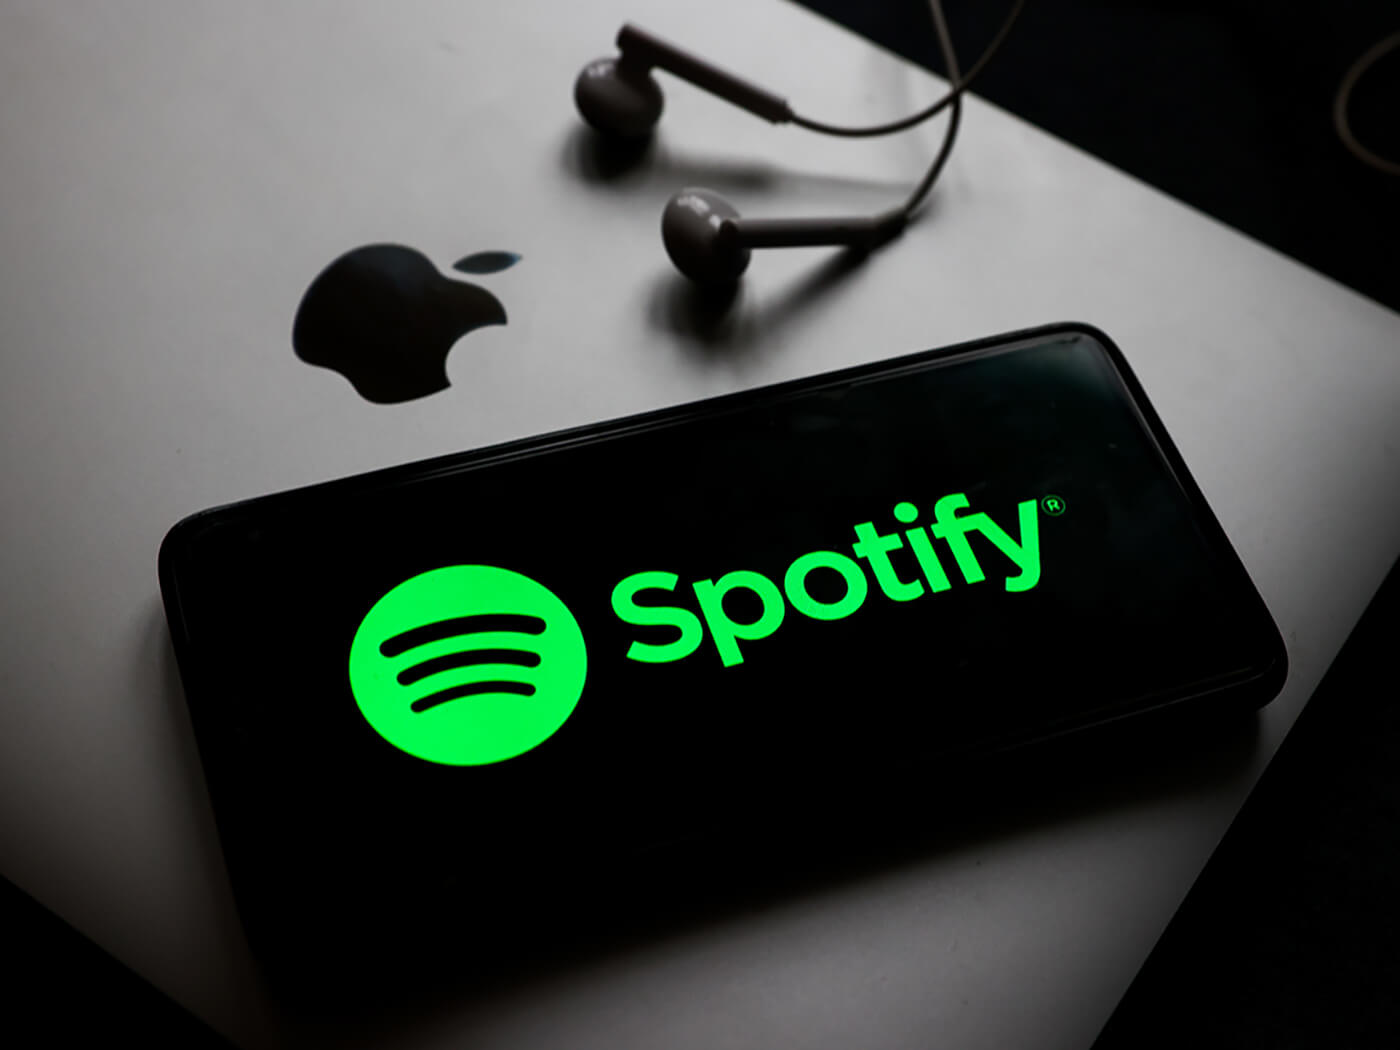 Spotify logo on a phone, alongside a Macbook and a pair of earphones, photo by Beata Zawrzel/NurPhoto via Getty Images